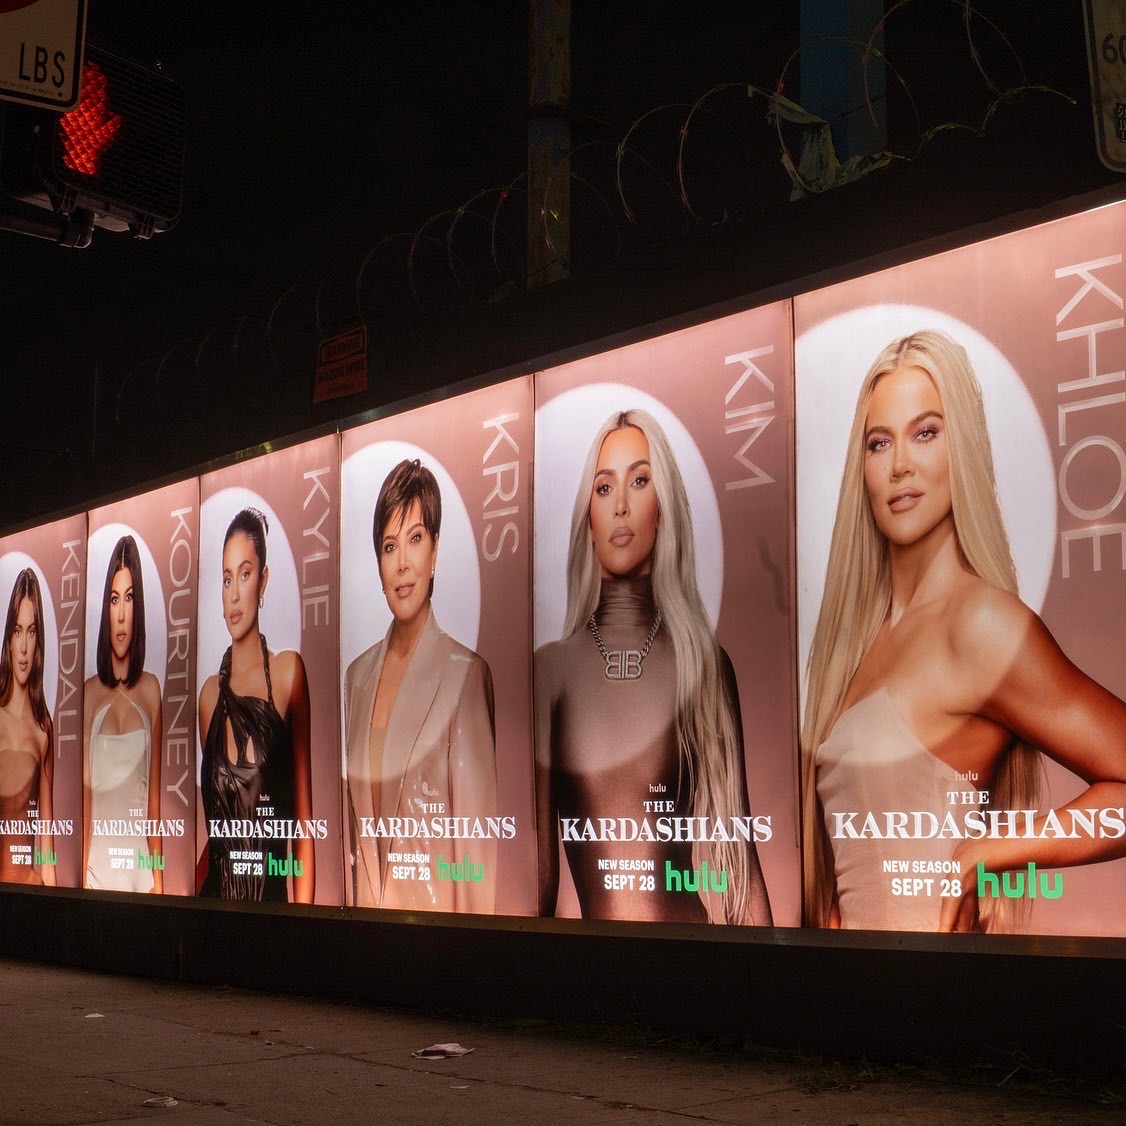 Kardashians Illumicade Barricade Ad Close Up Los Angeles Night Time